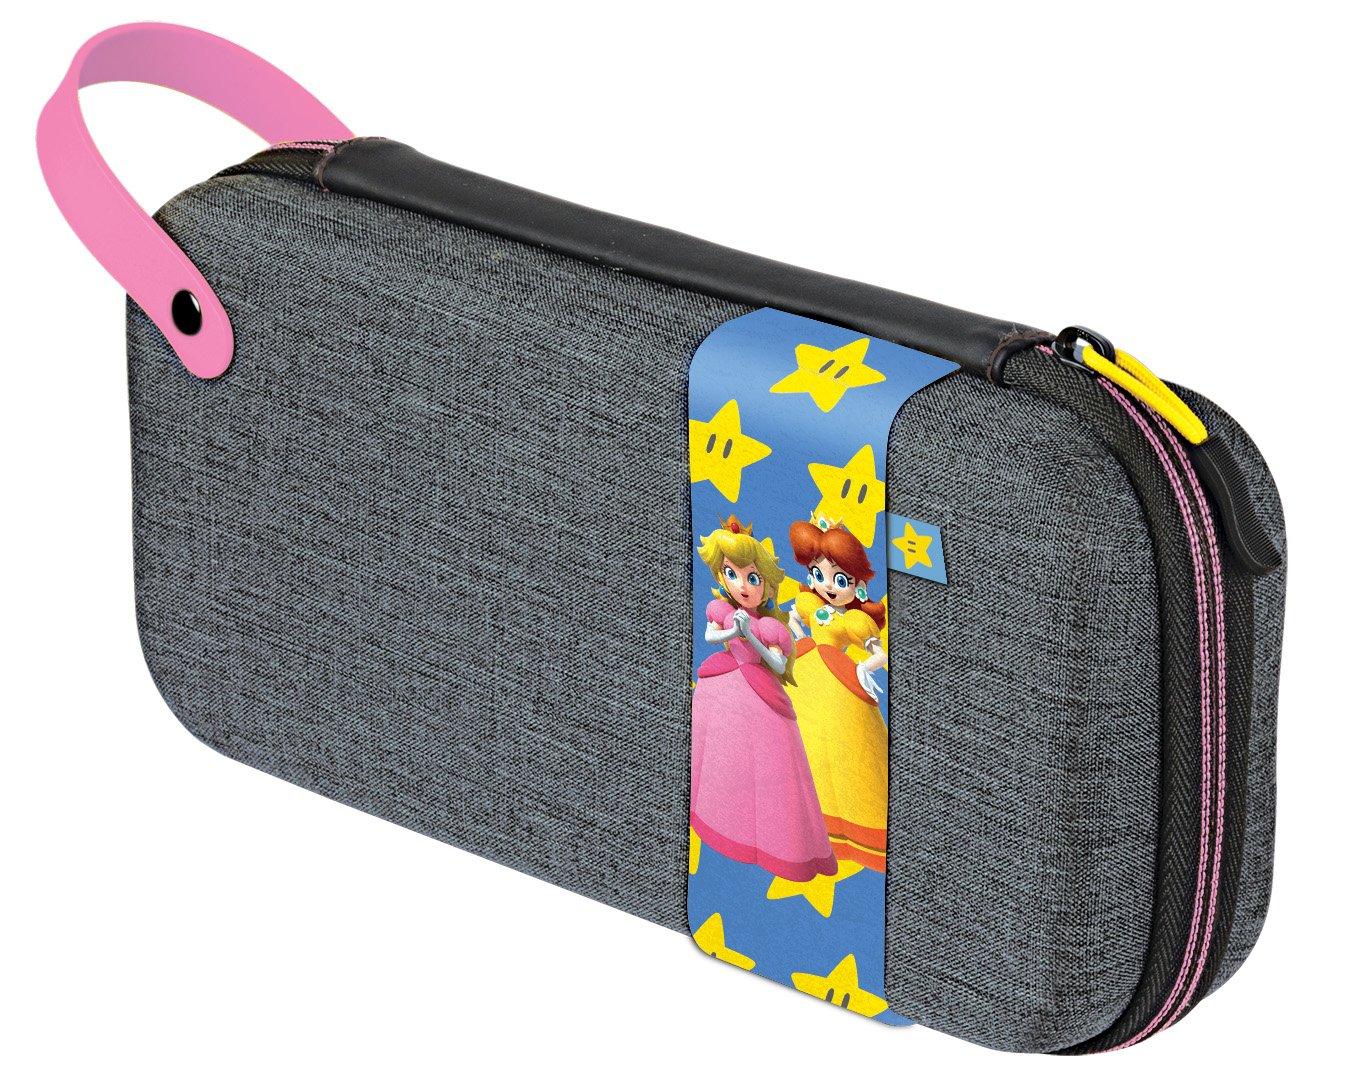 Super Mario Bros. Princess Peach and Princess Daisy Deluxe Travel Case for Nintendo Switch